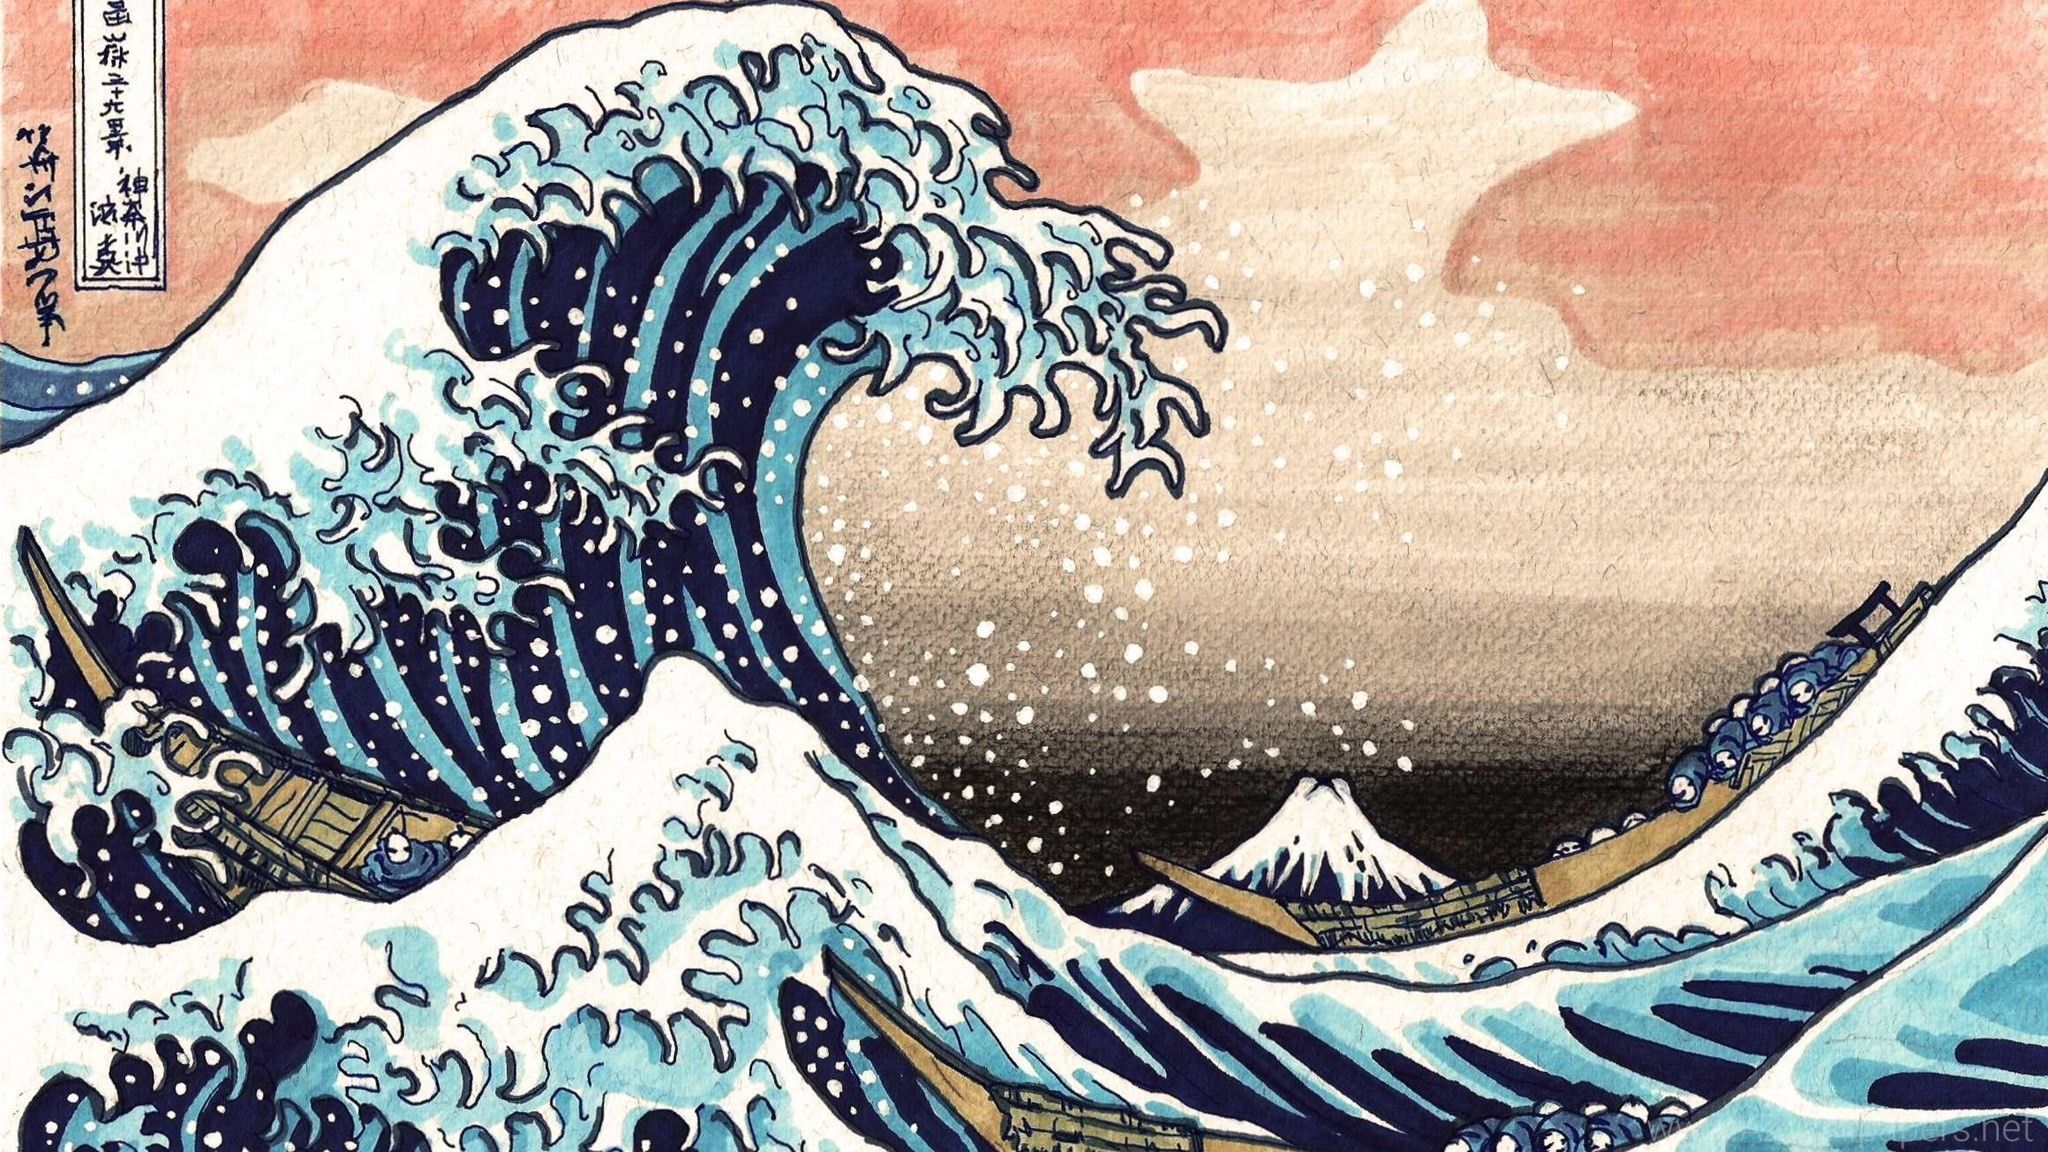 The Great Wave Off Kanagawa Hd Wallpapers - Wallpaper Cave